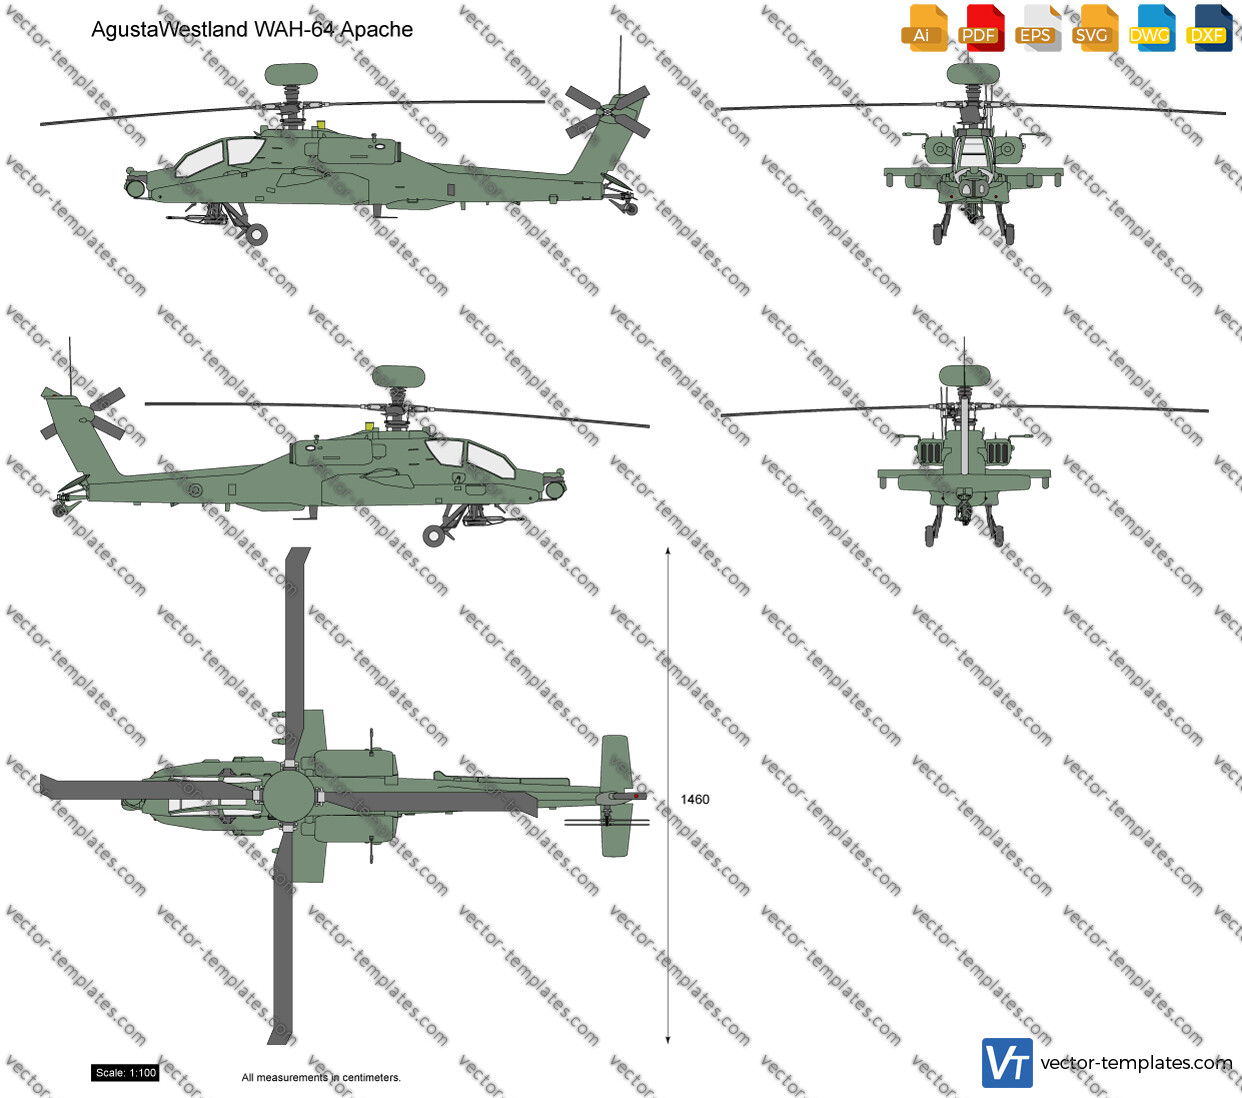 AgustaWestland WAH-64 Apache 